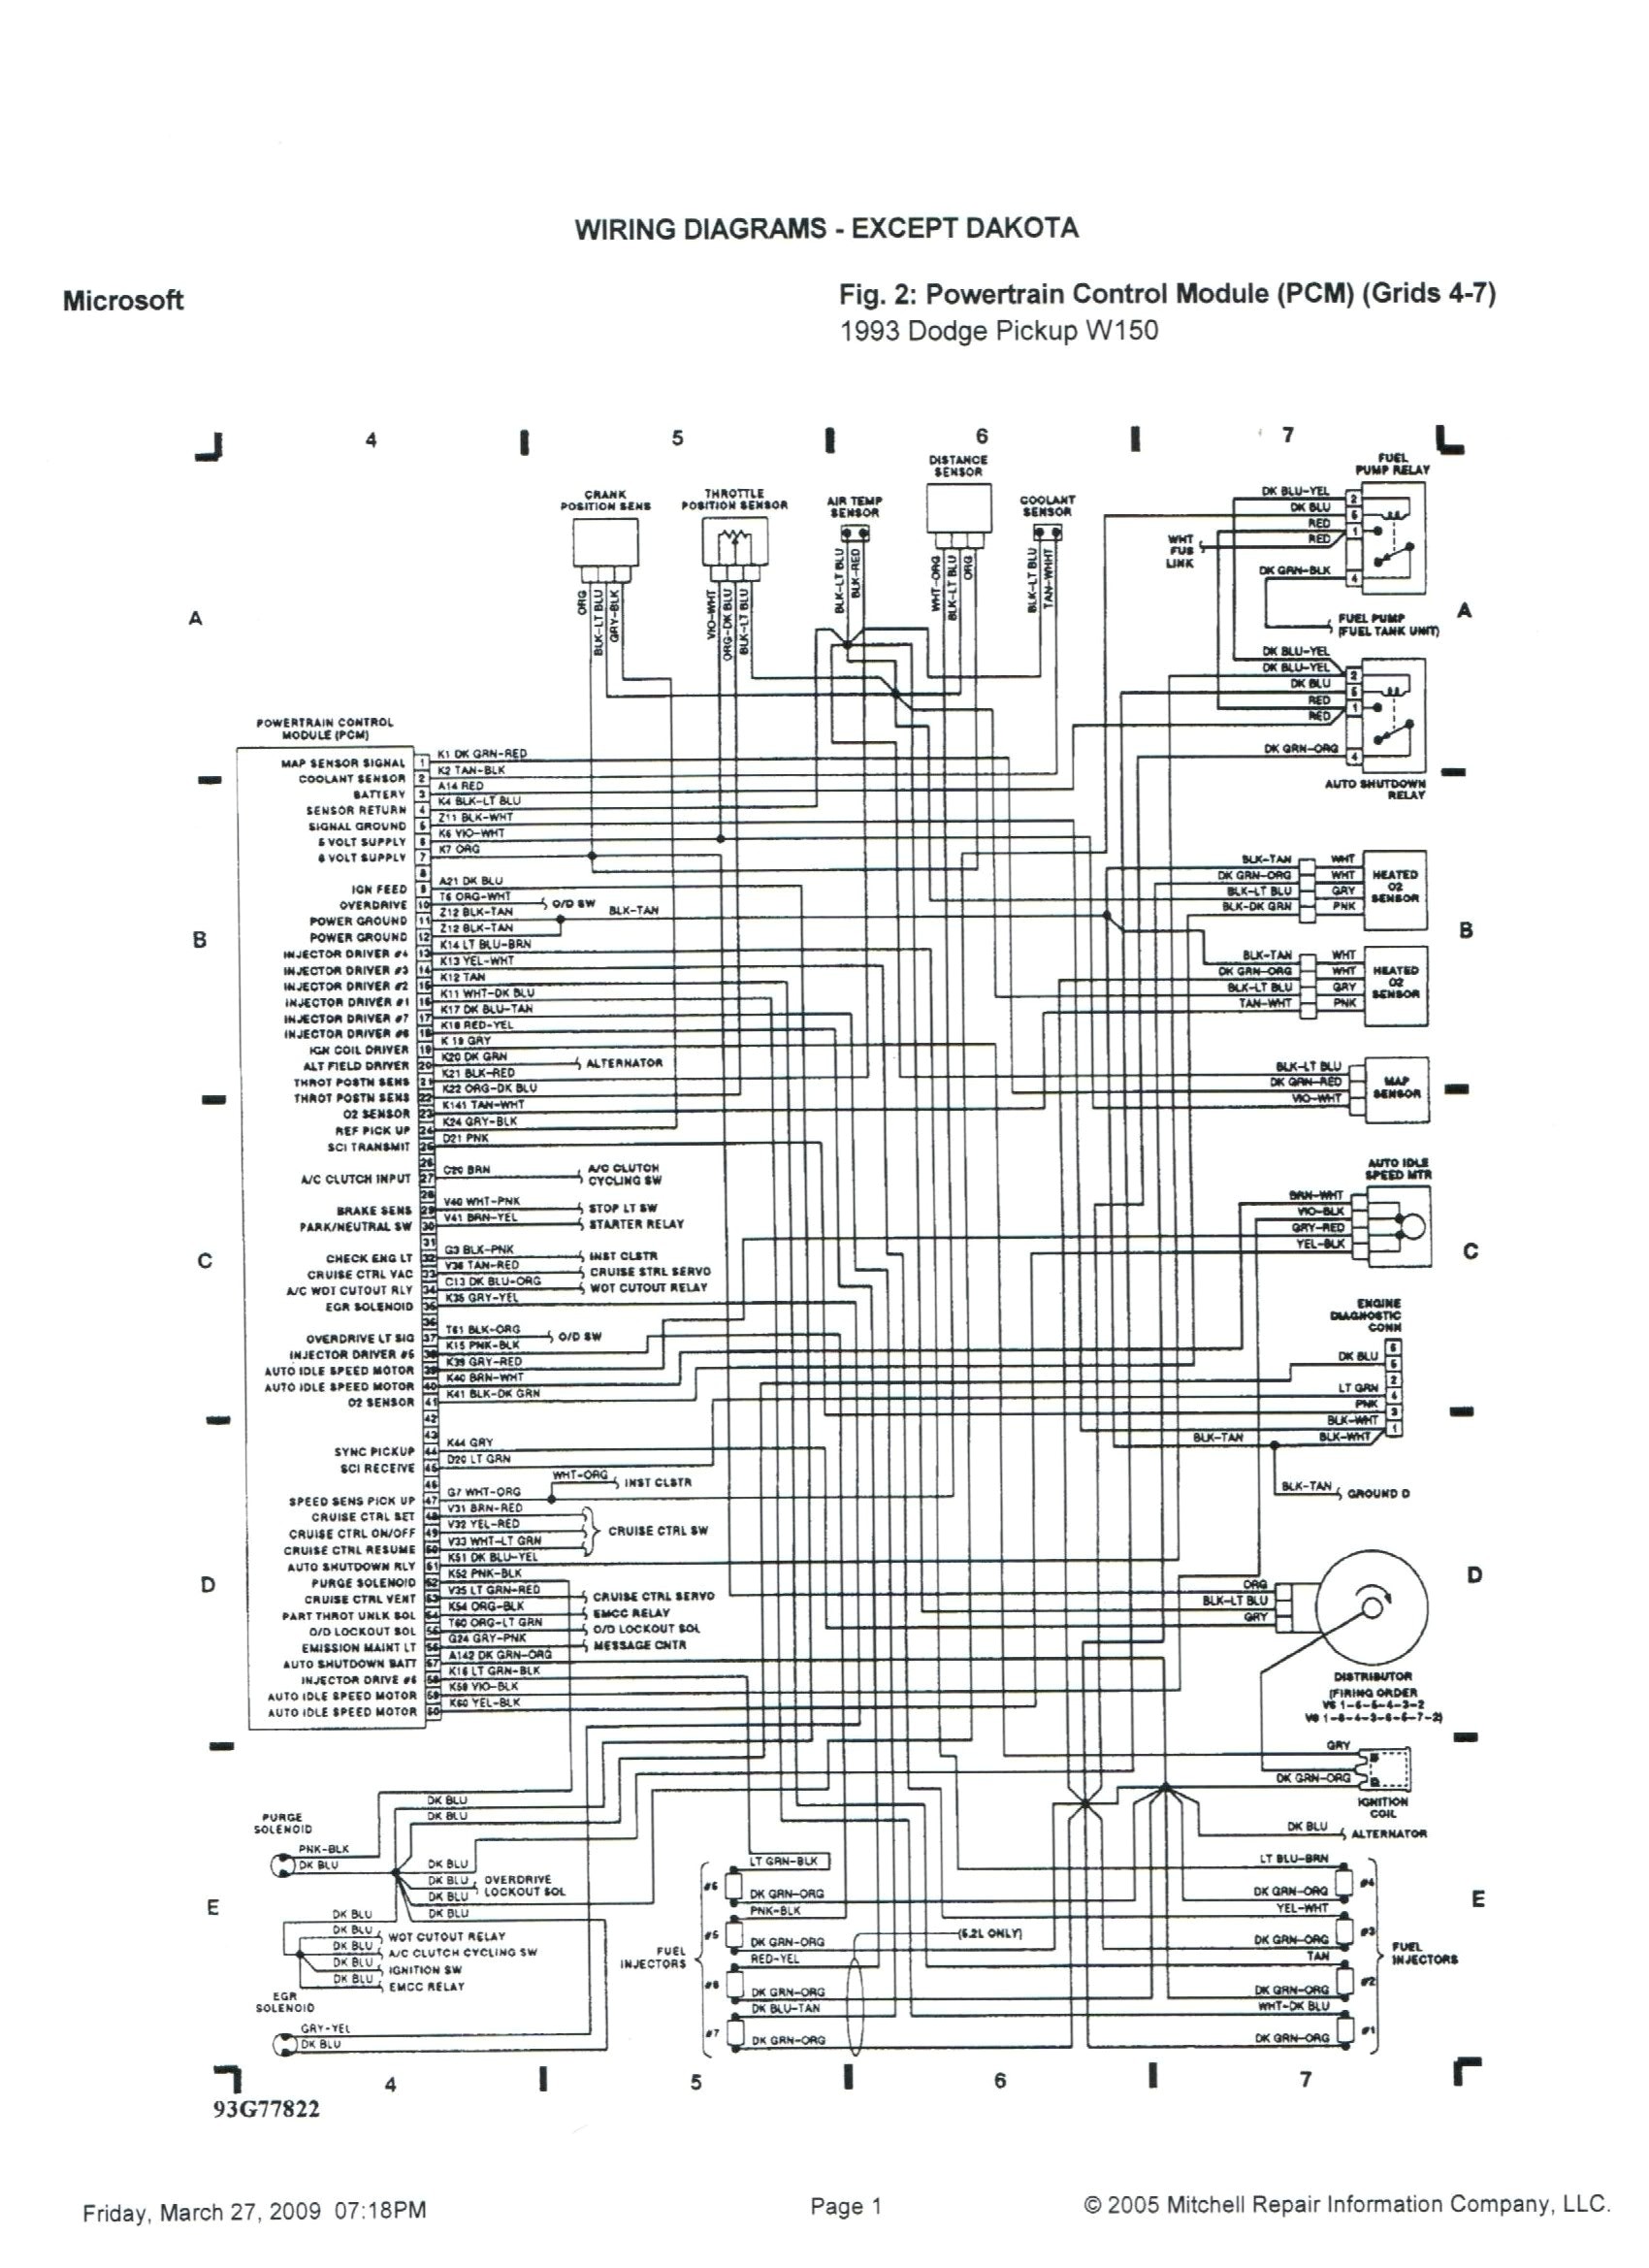 2010 Dodge Charger Engine Diagram 2010 Dodge Wiring Diagram Wiring Diagram toolbox Of 2010 Dodge Charger Engine Diagram